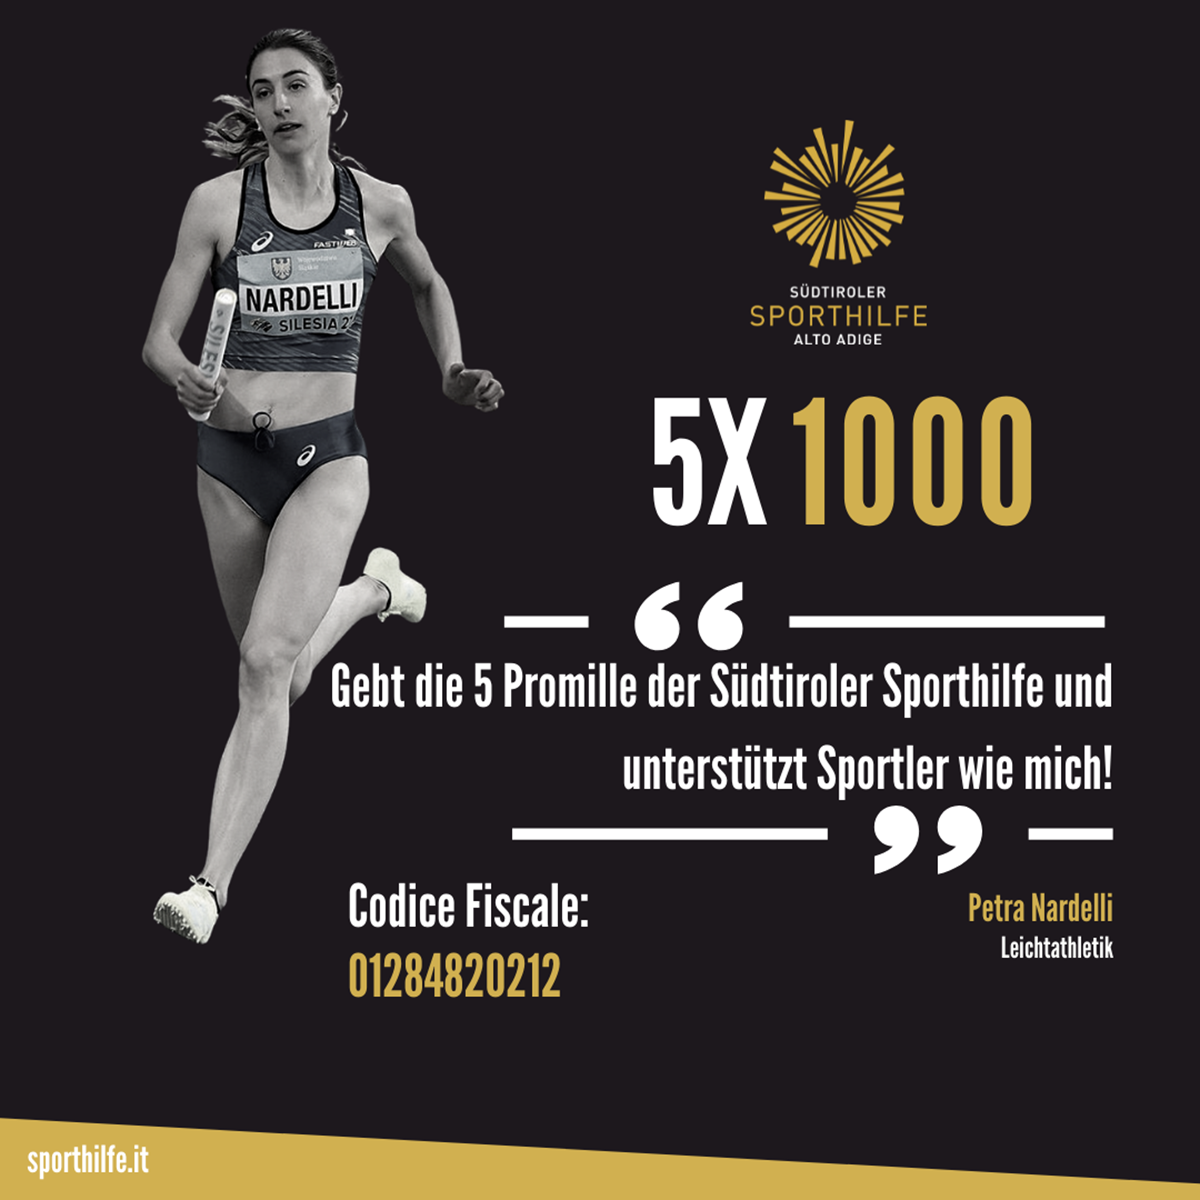 Petra Nardelli (Leichtathletik)